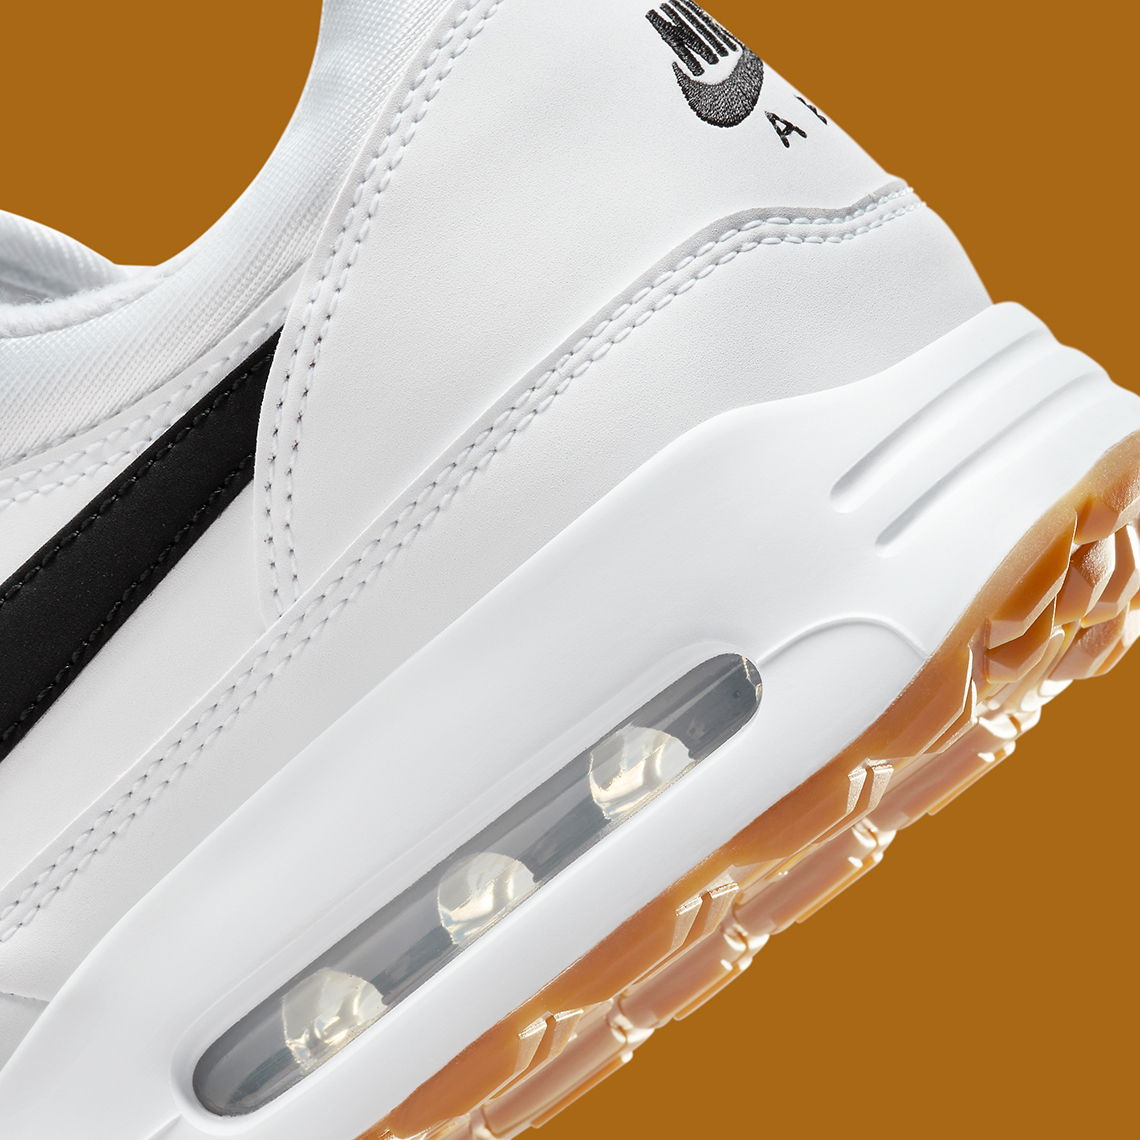 Nike Air Max 97 Nintendo 64 Jackets to Match 1 86 Og Golf White Black Gum Fn0697 100 2